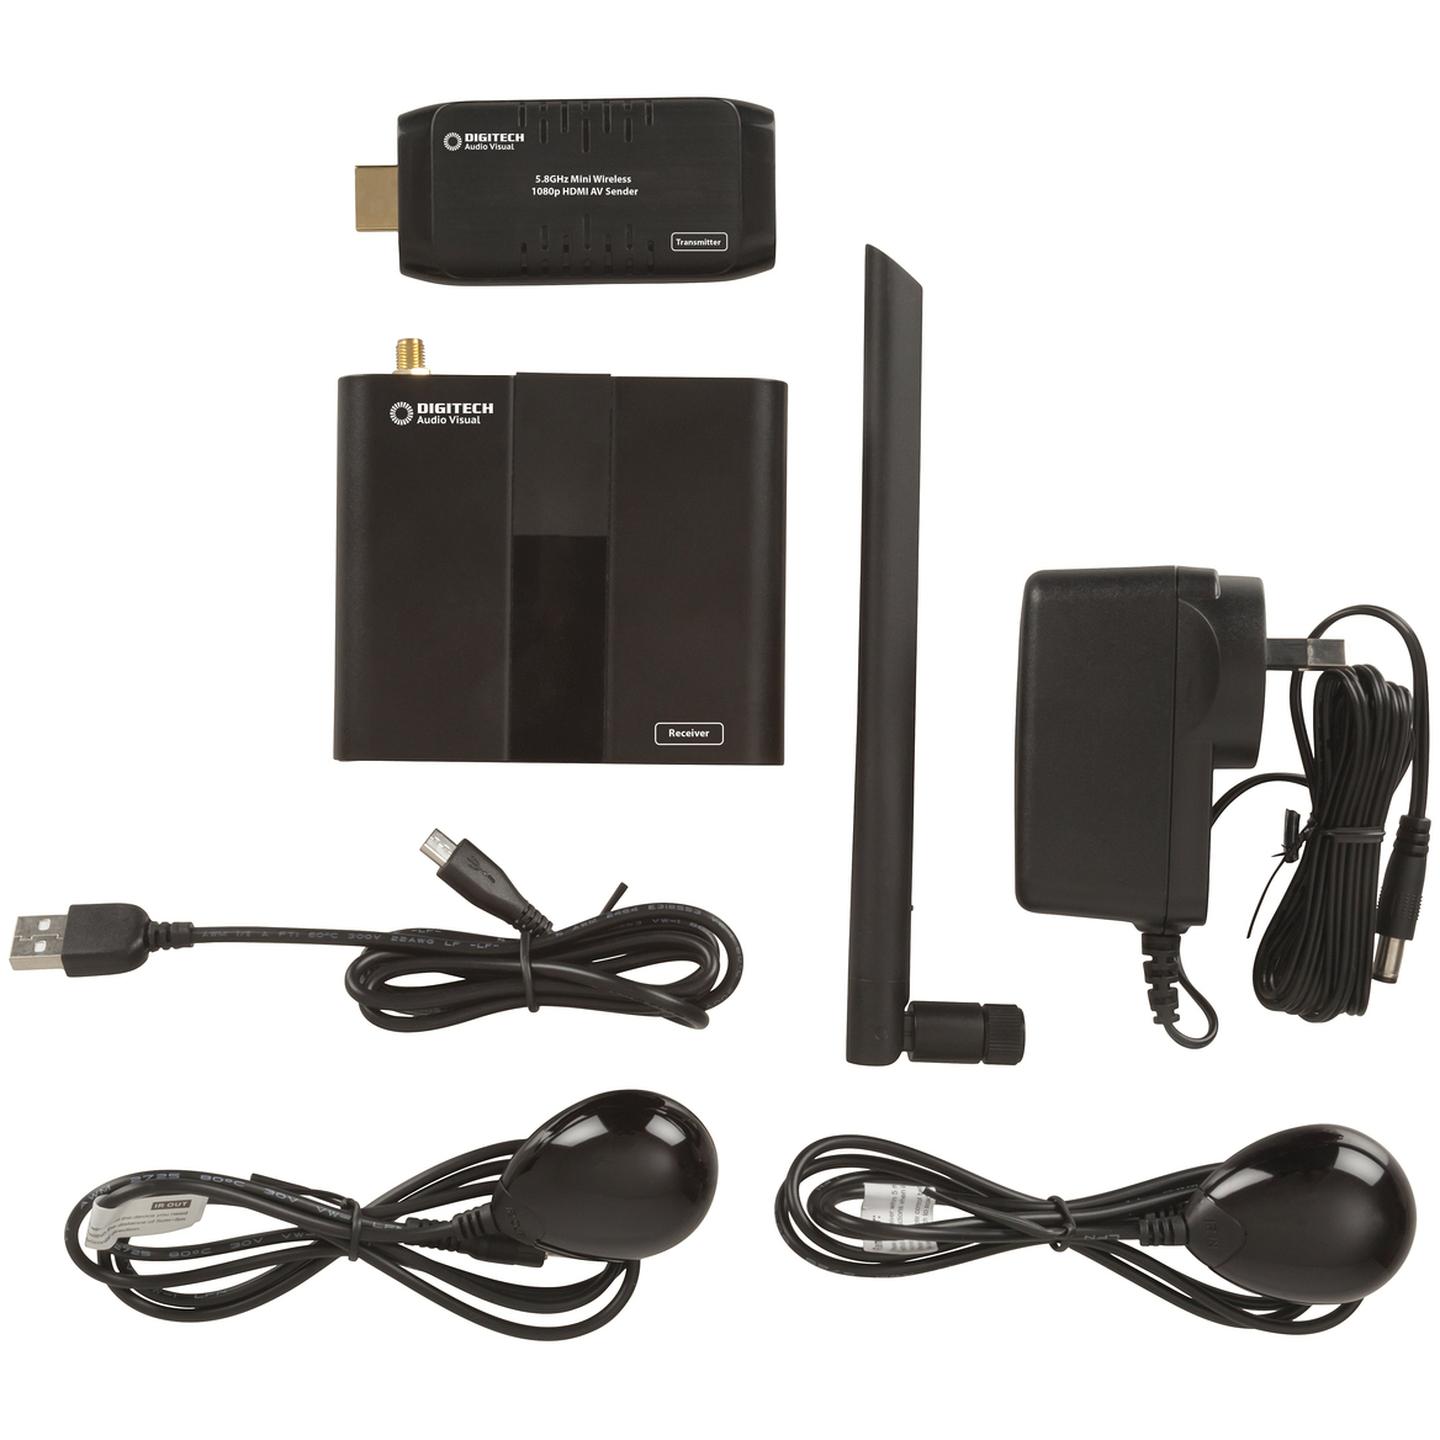 5.8GHz Wireless HDMI 1080P portable Sender/Receiver